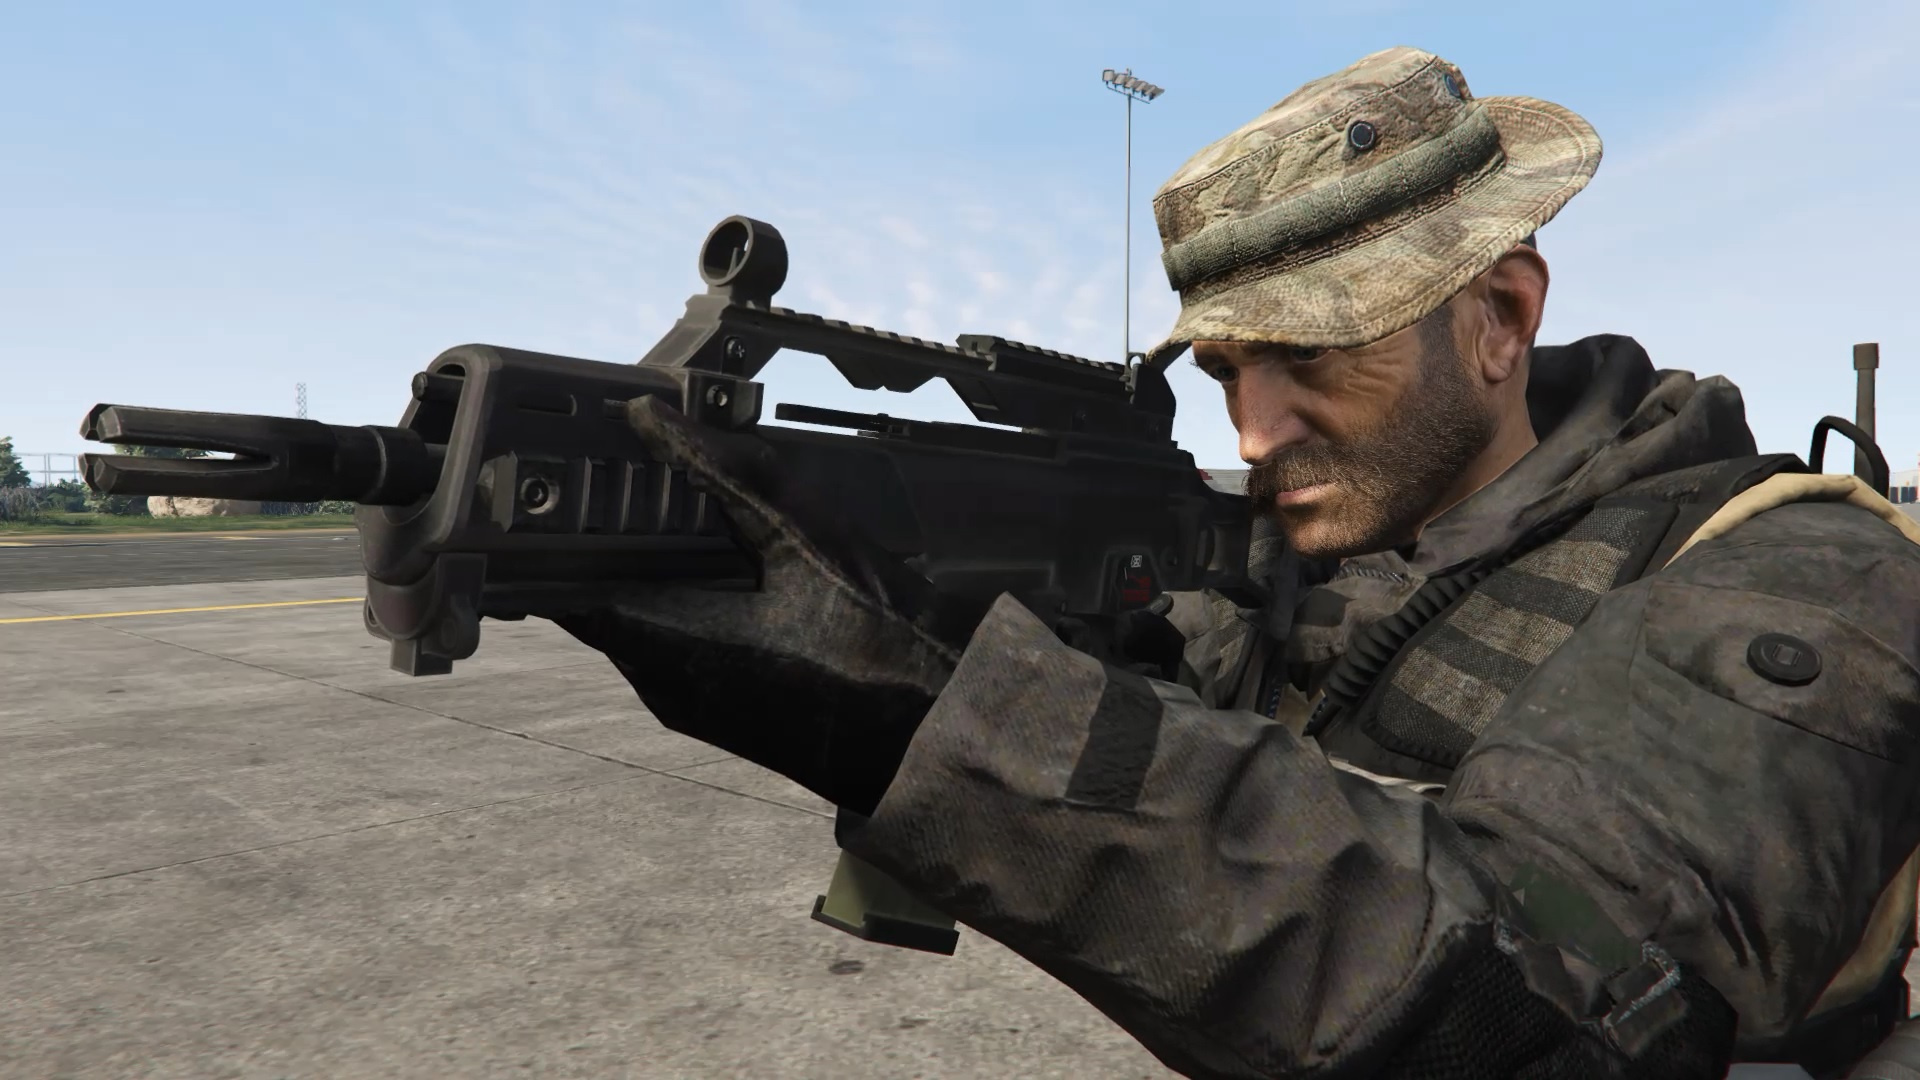 Call of Duty Modern Warfare Remastered İndir Türkçe - Full